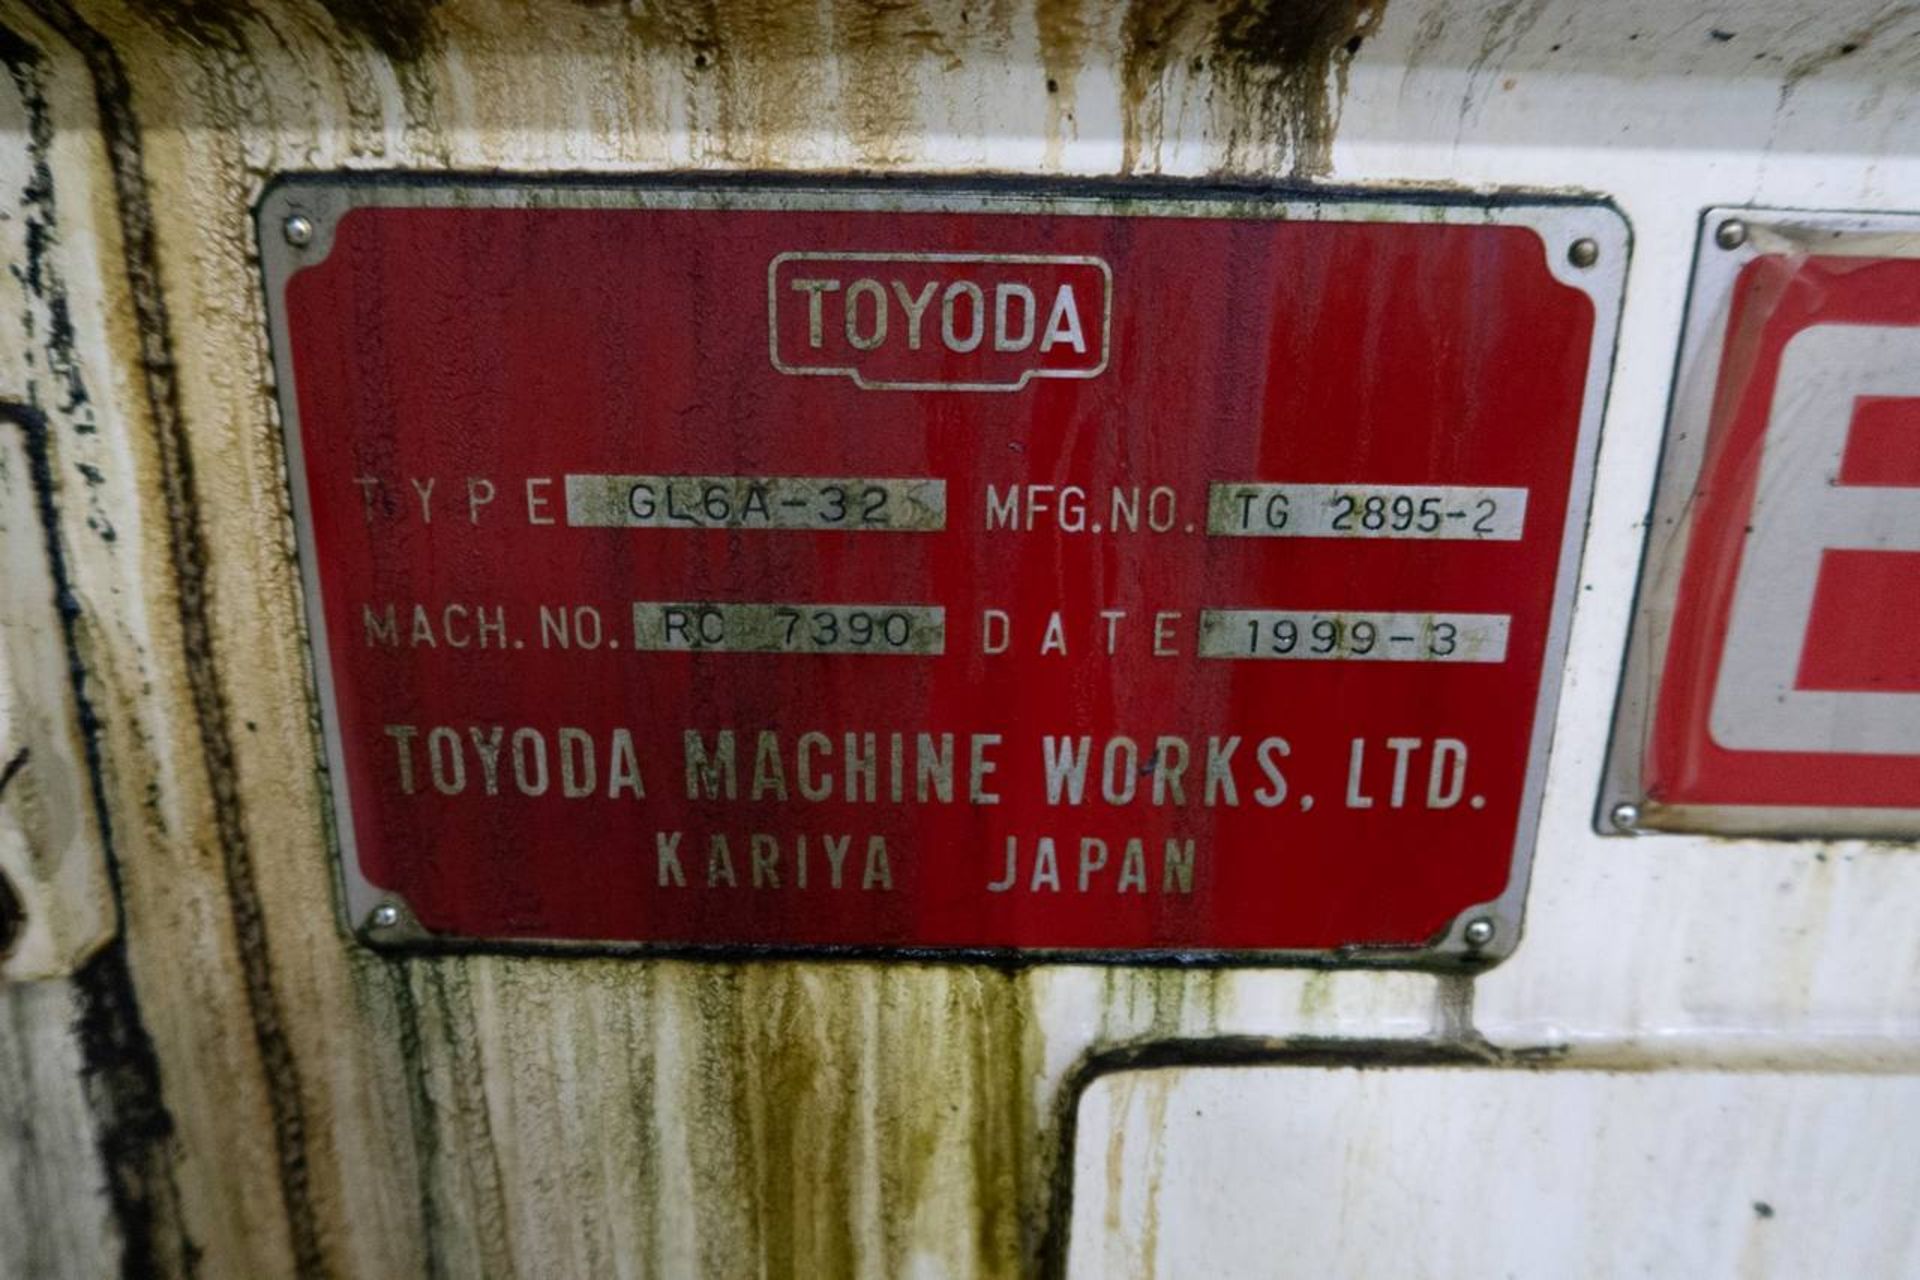 1999 Toyoda GL6A-32 CNC OD Grinder - Image 4 of 4